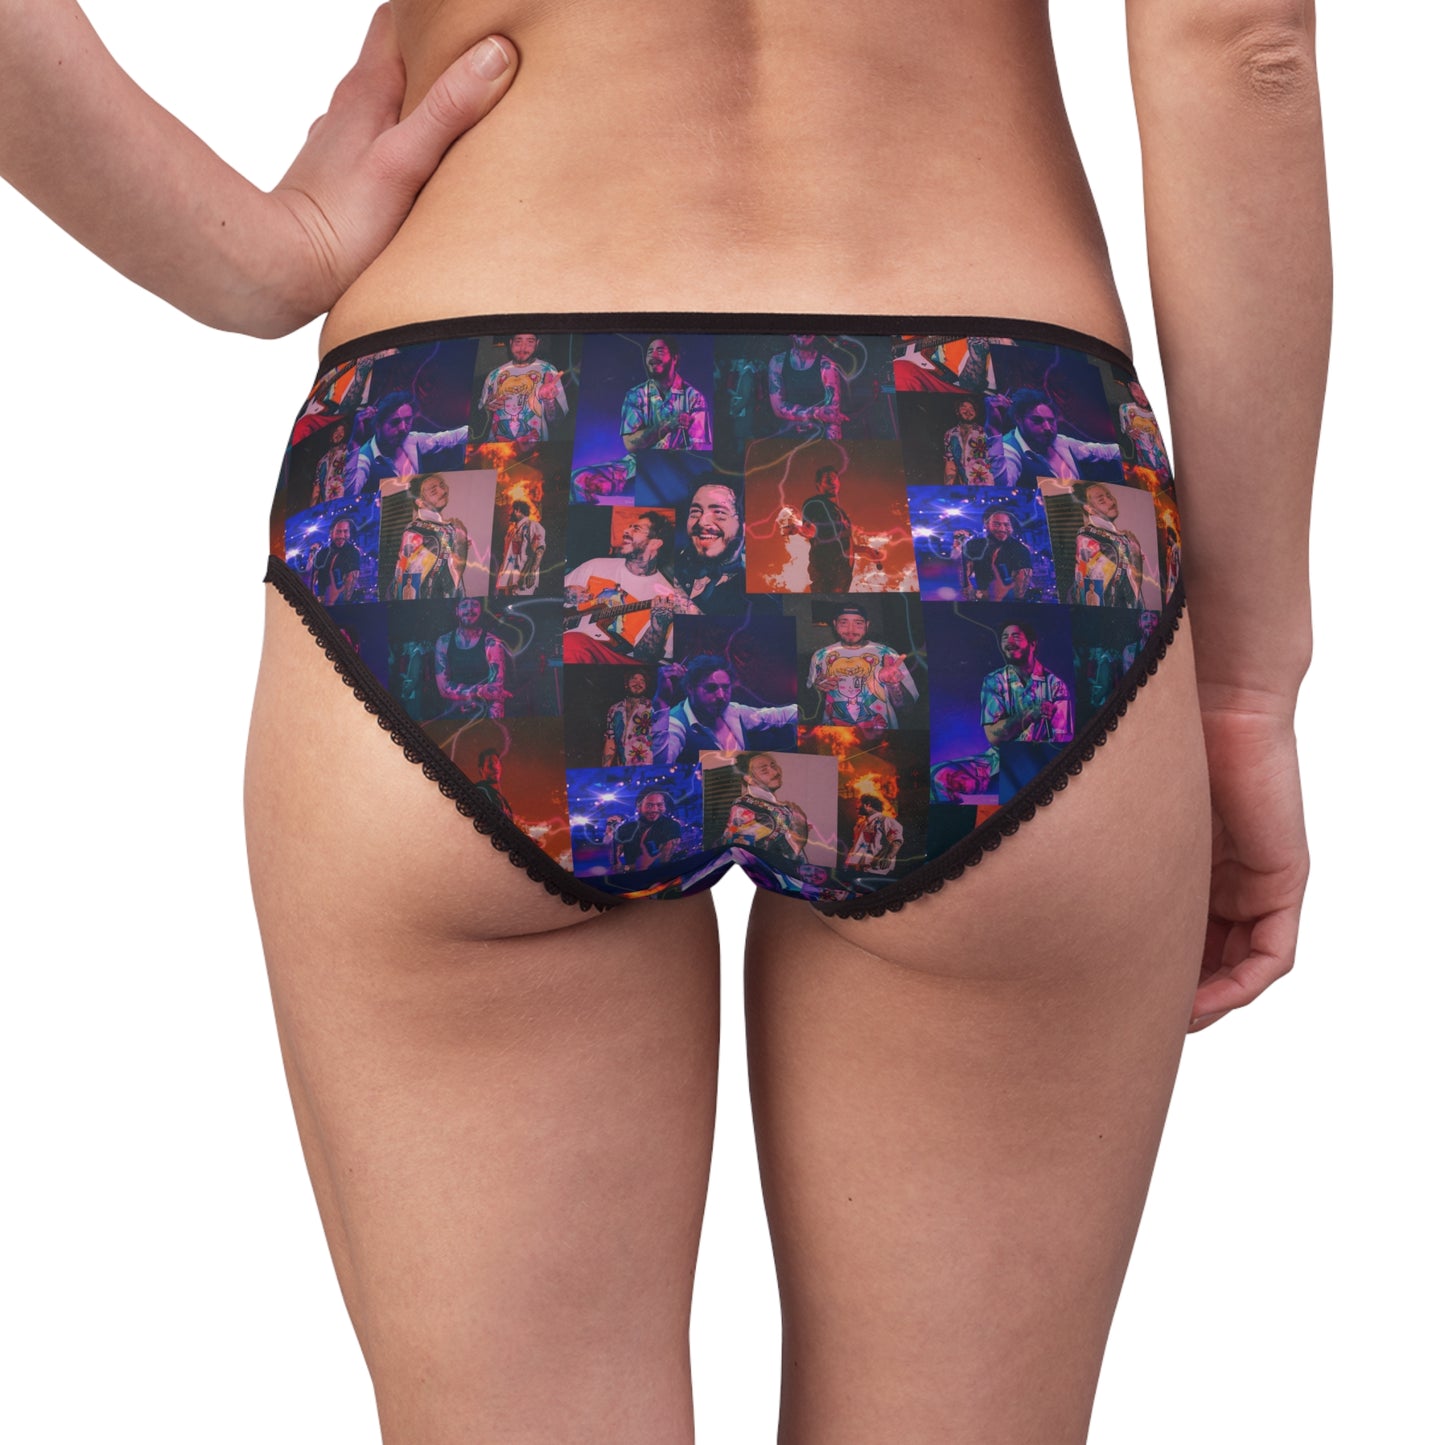 Post Malone Lightning Photo Collage Women's Briefs Panties